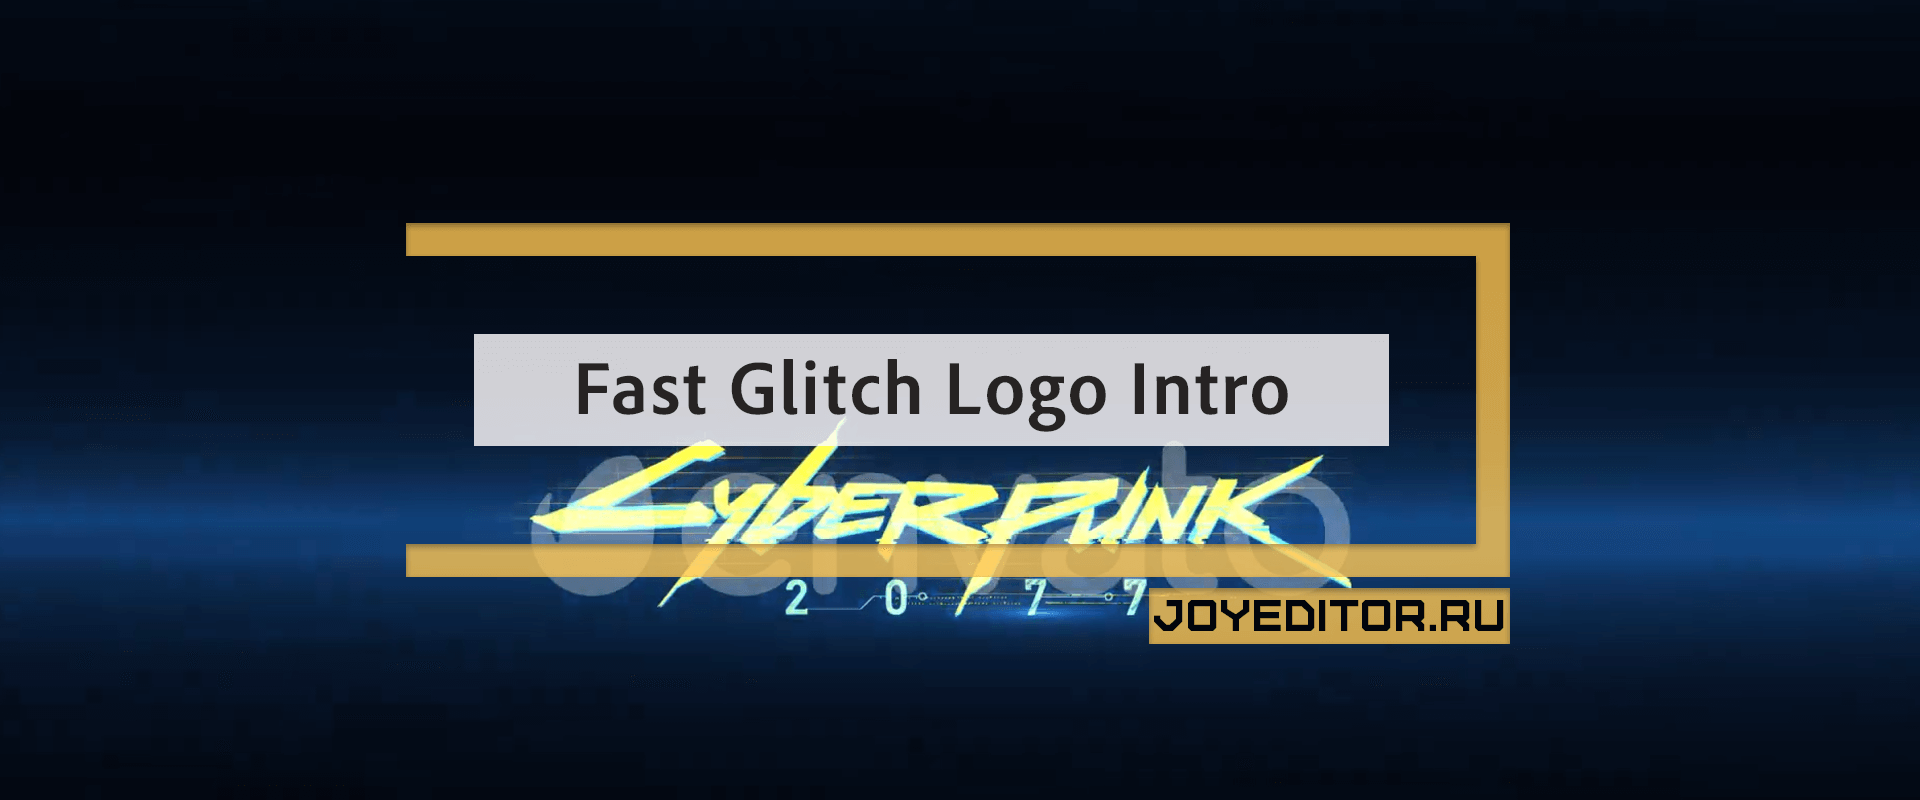 Fast Glitch Logo Intro